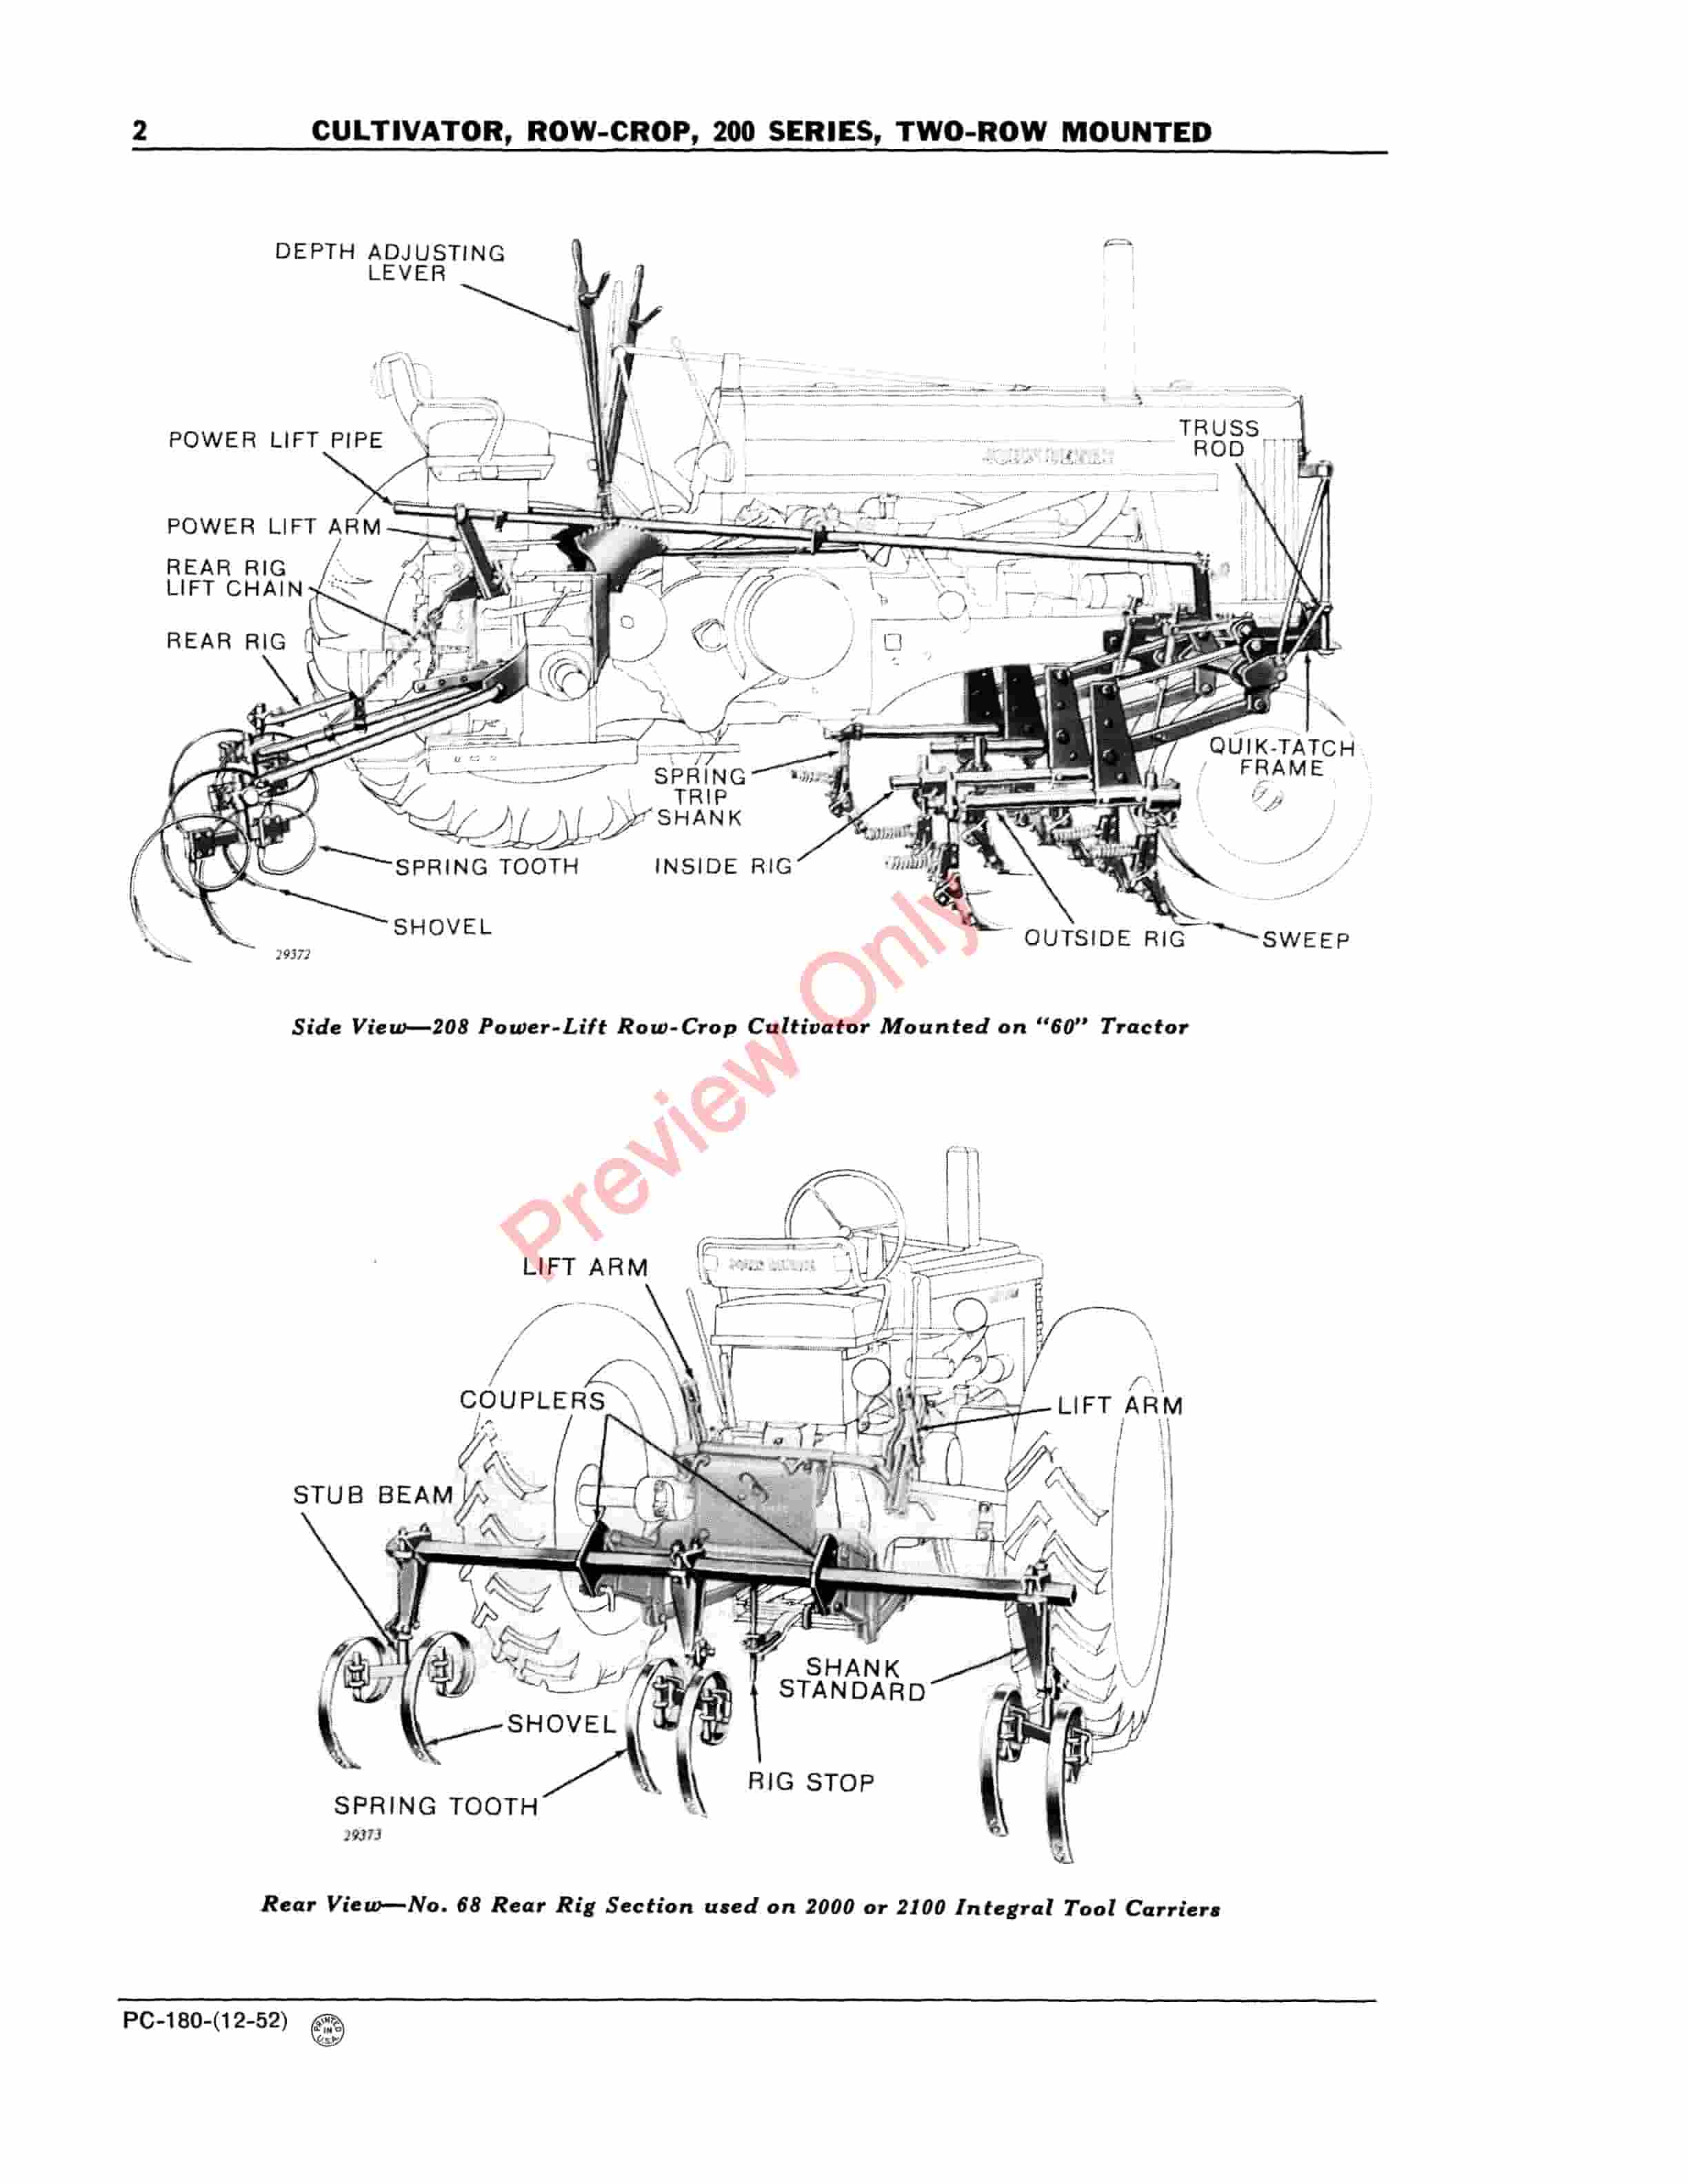 John Deere 200 Series Row-Crop Cultivators – Two-Row Mounted Parts Catalog PC180 01NOV57-4